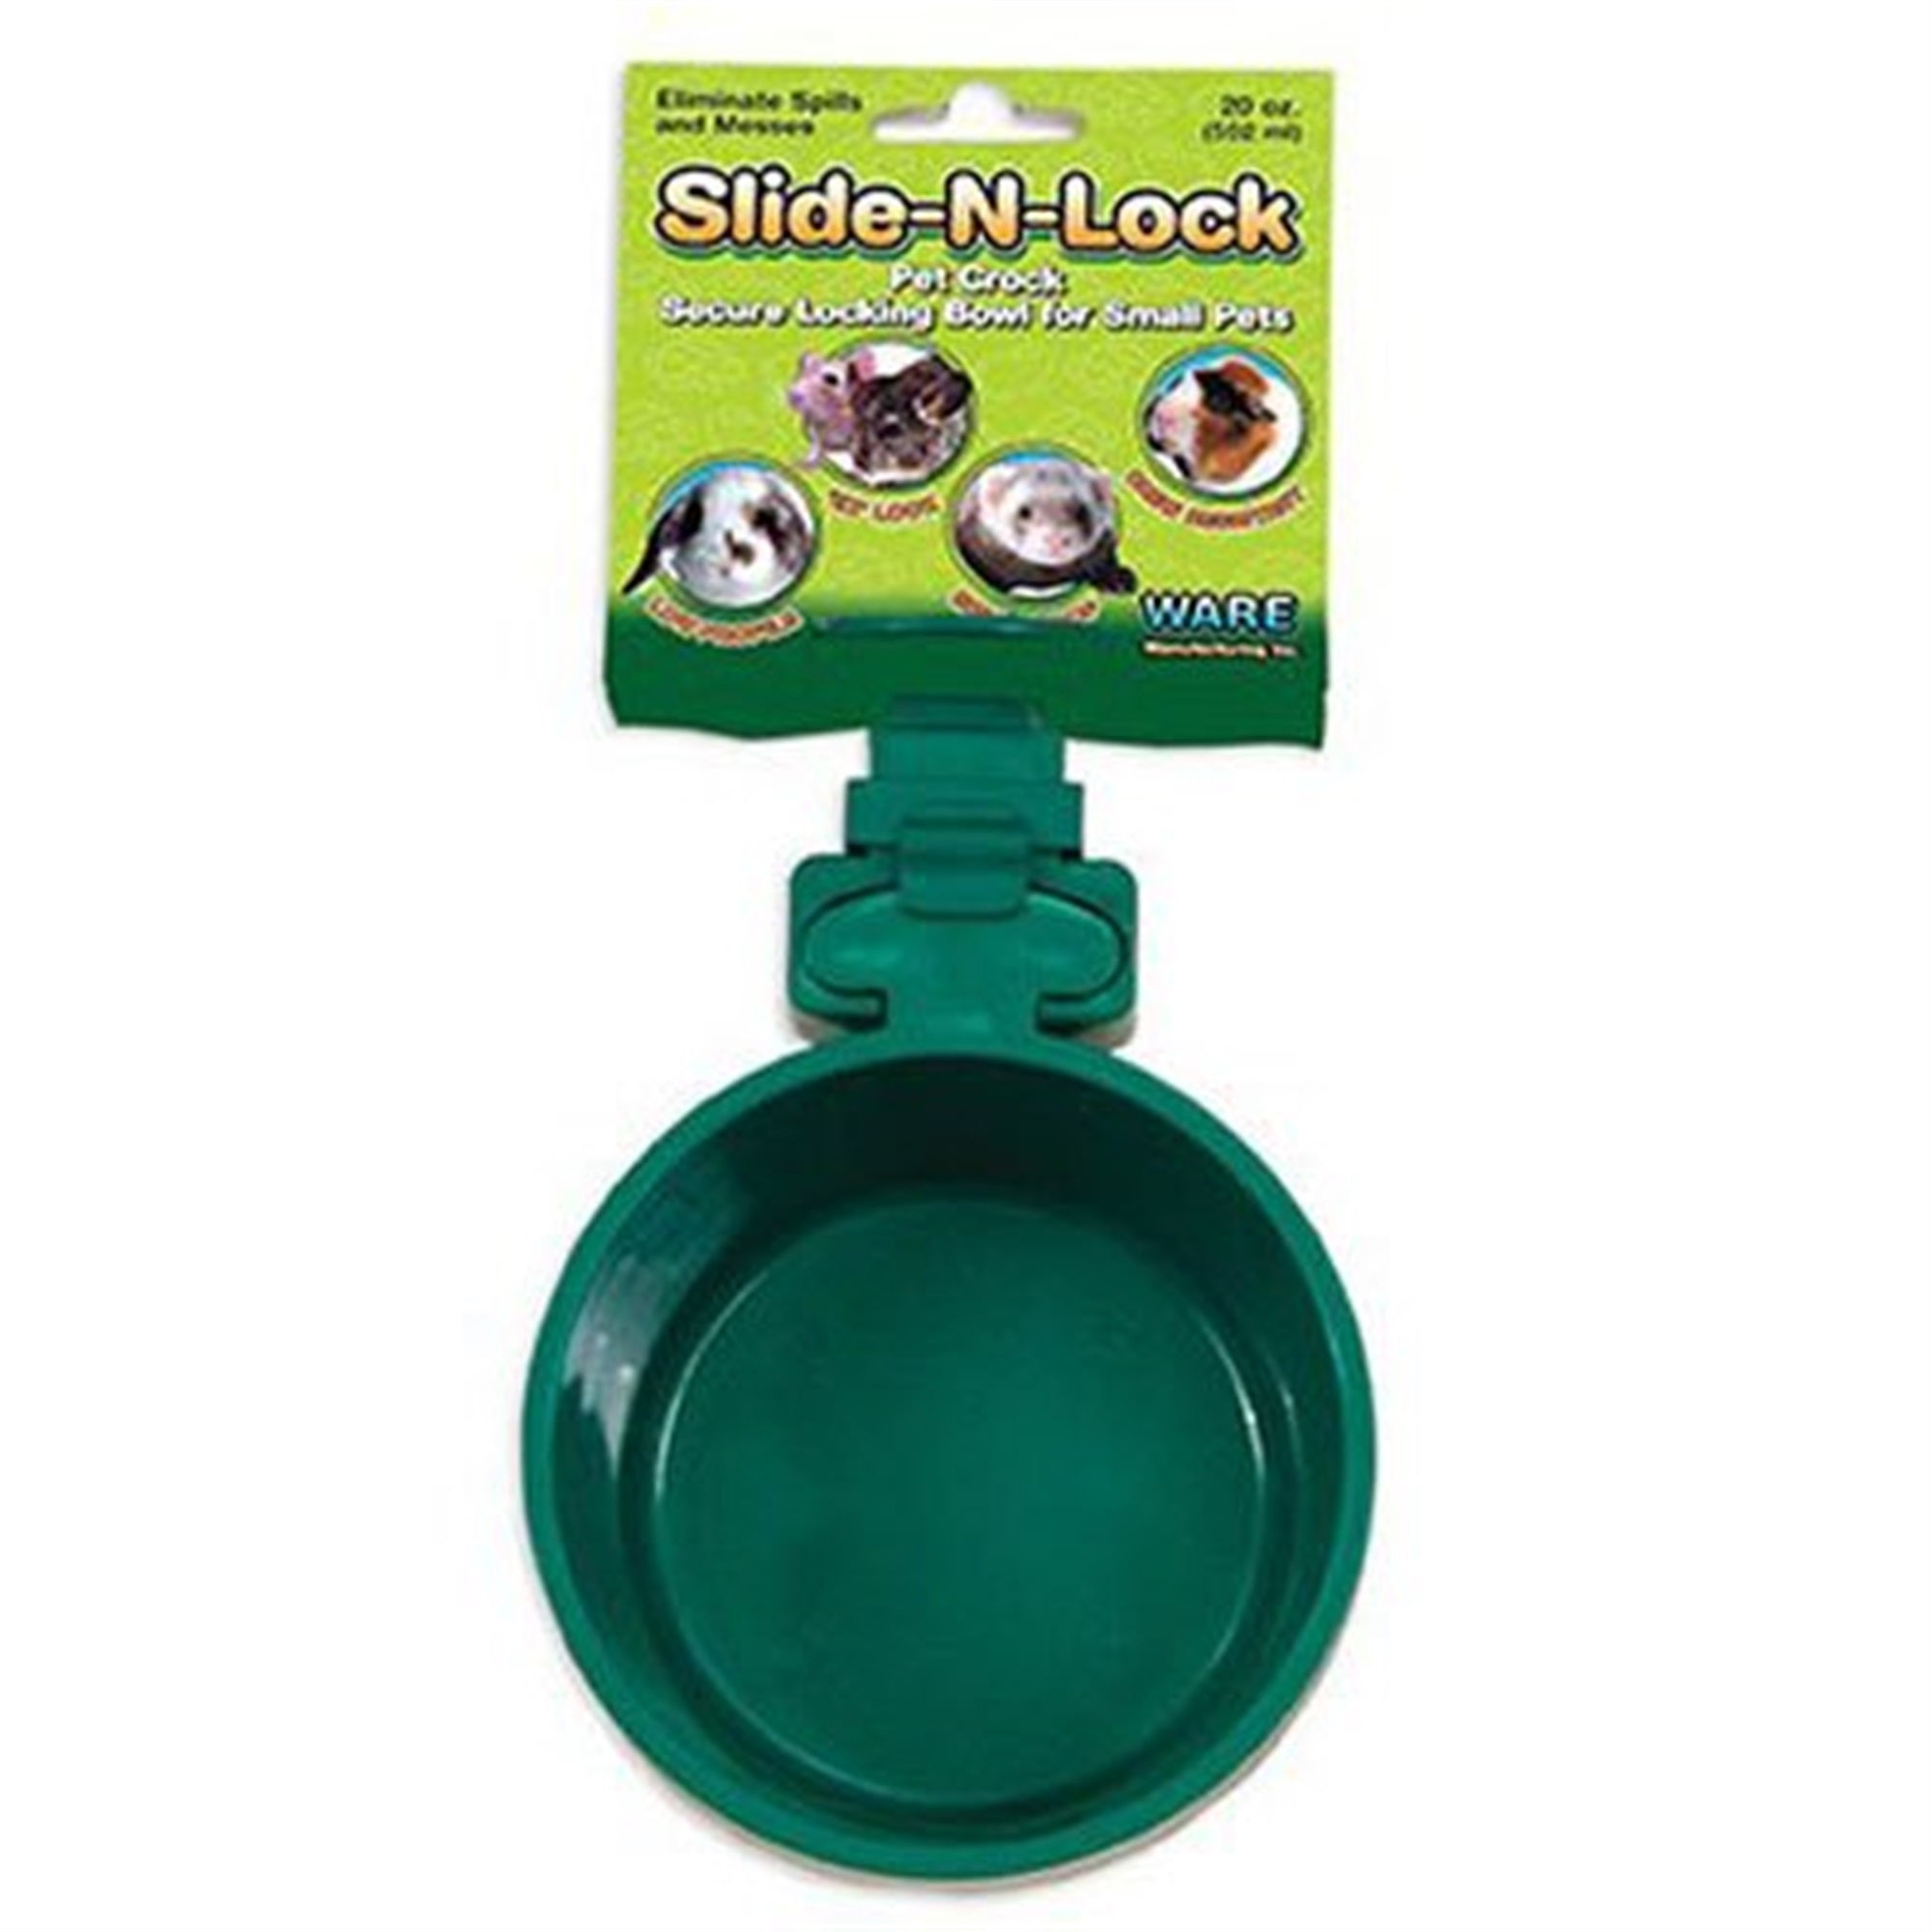 Ware Manufacturing Slide-N-Lock Crock Pet Bowl, Assorted Colors, Small, 20 oz (Pack of 1)